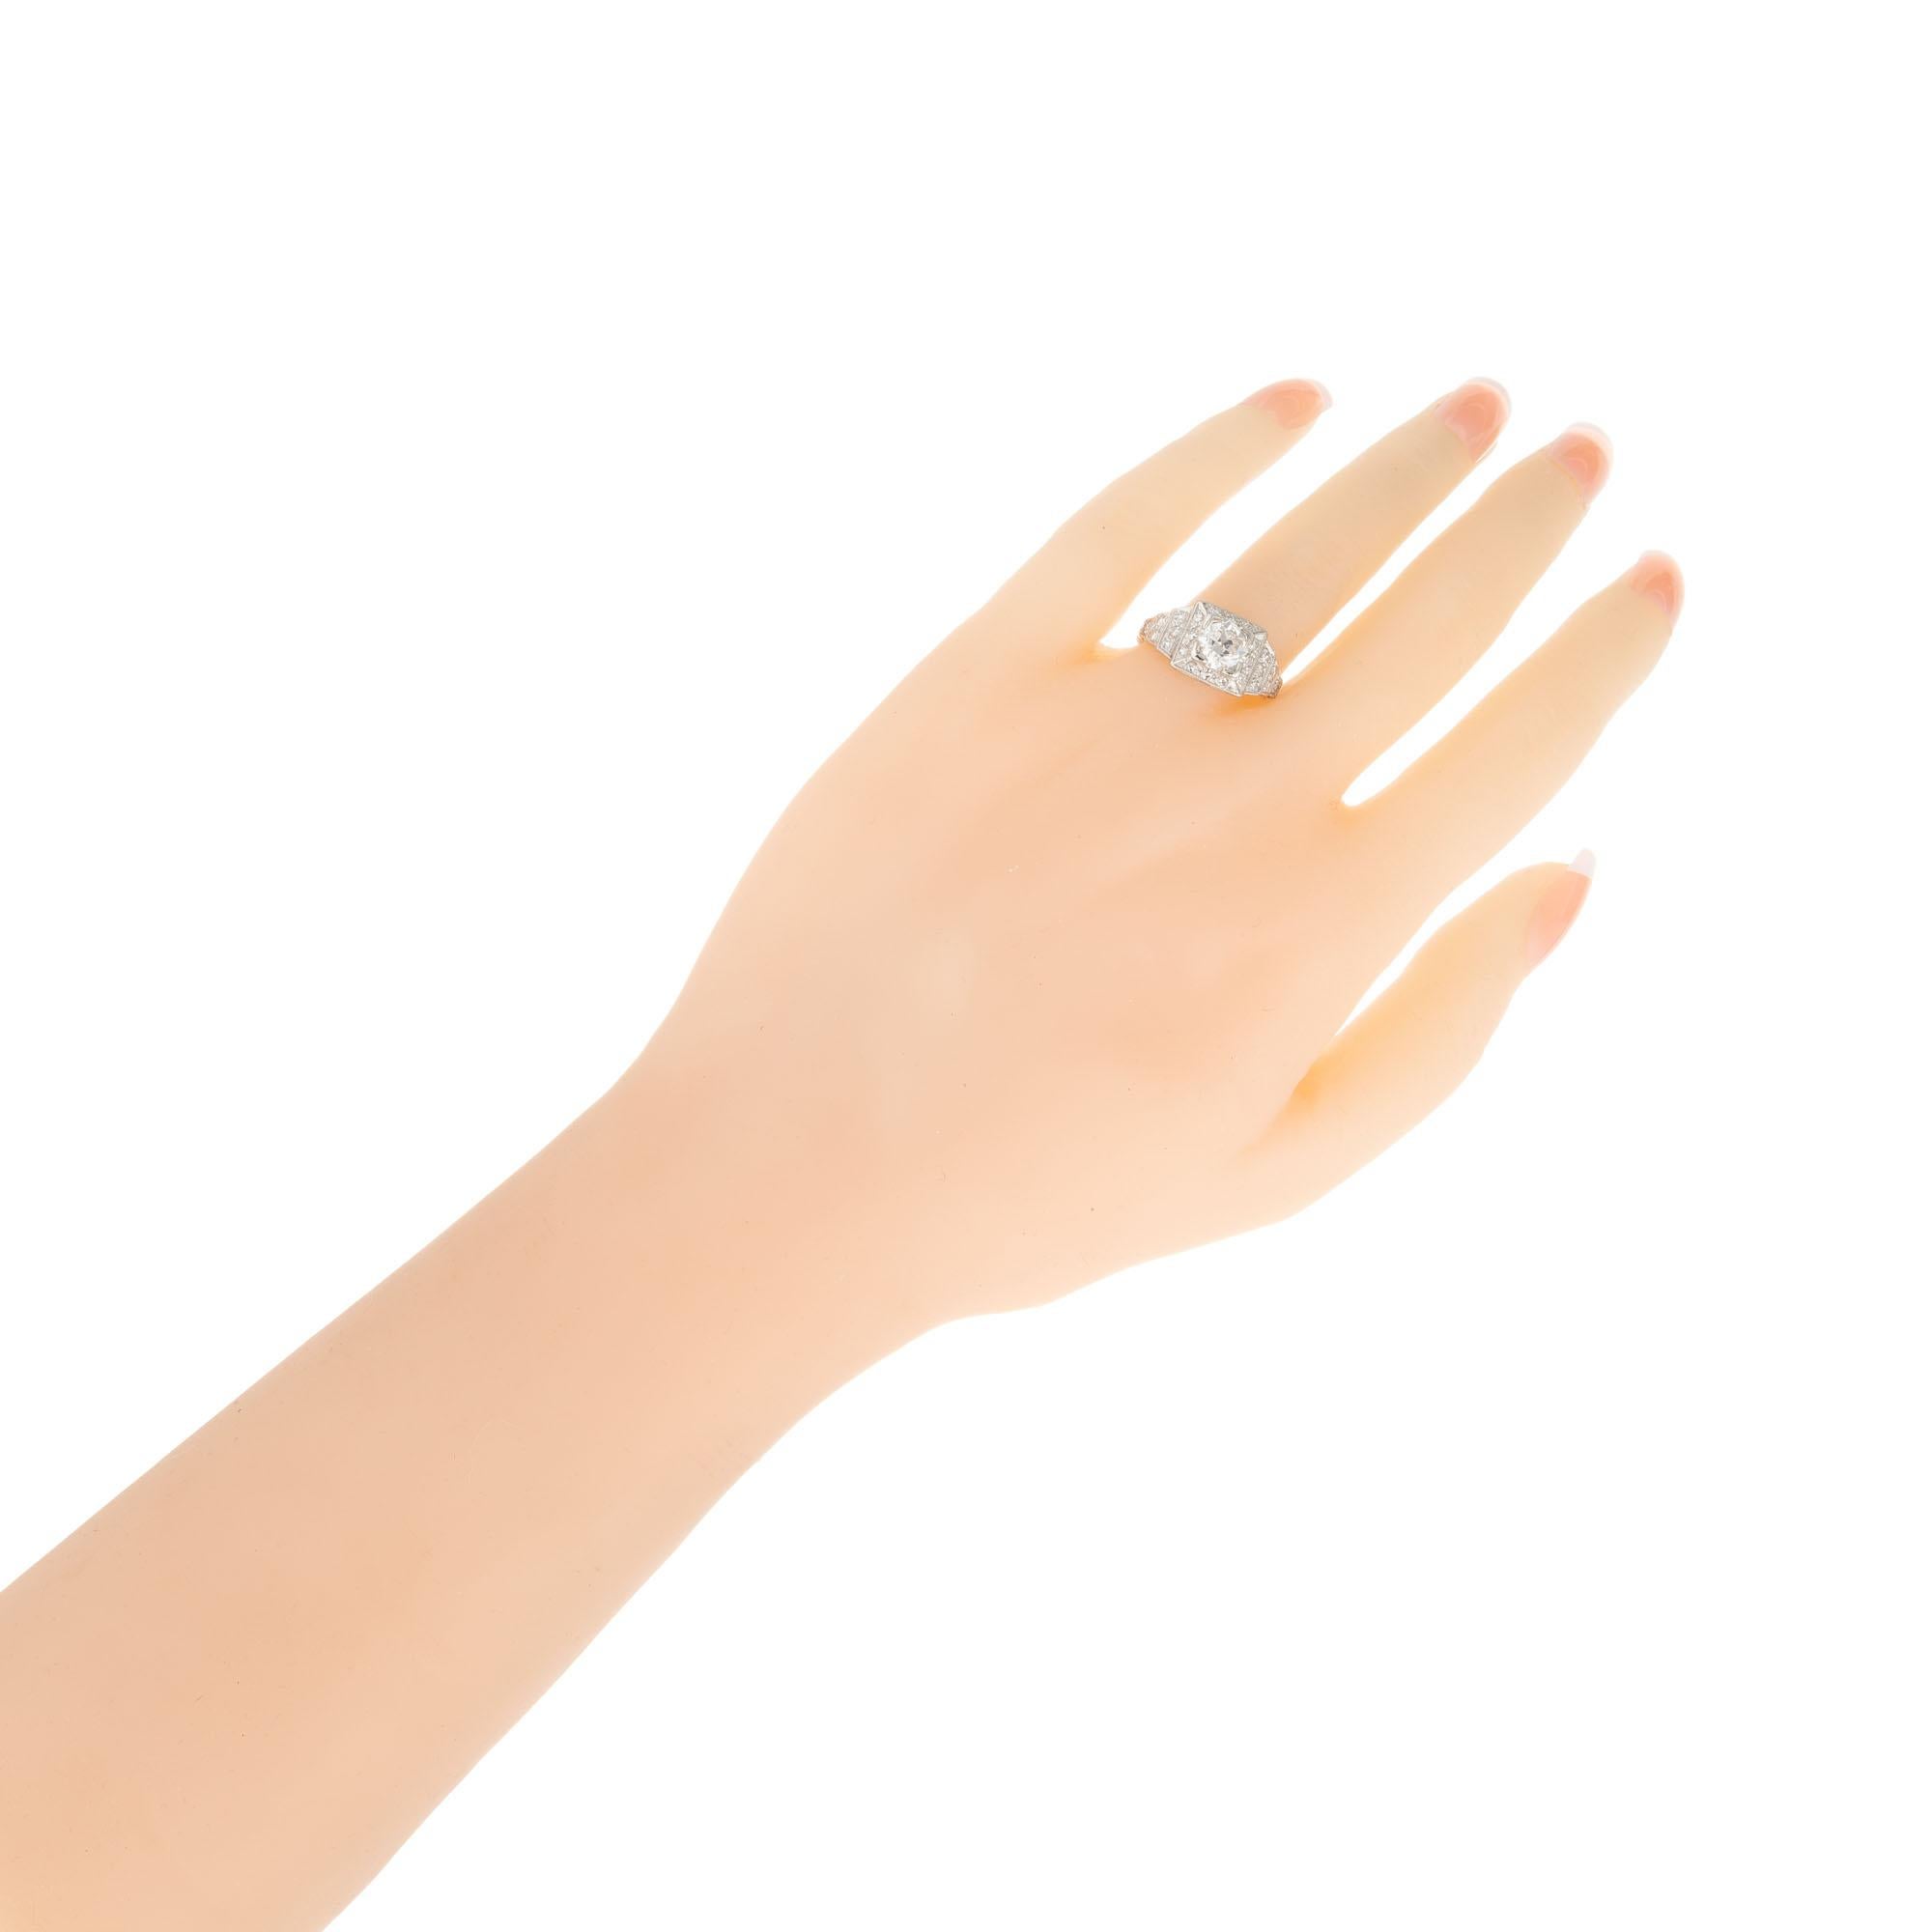 1.5 carat round diamond ring